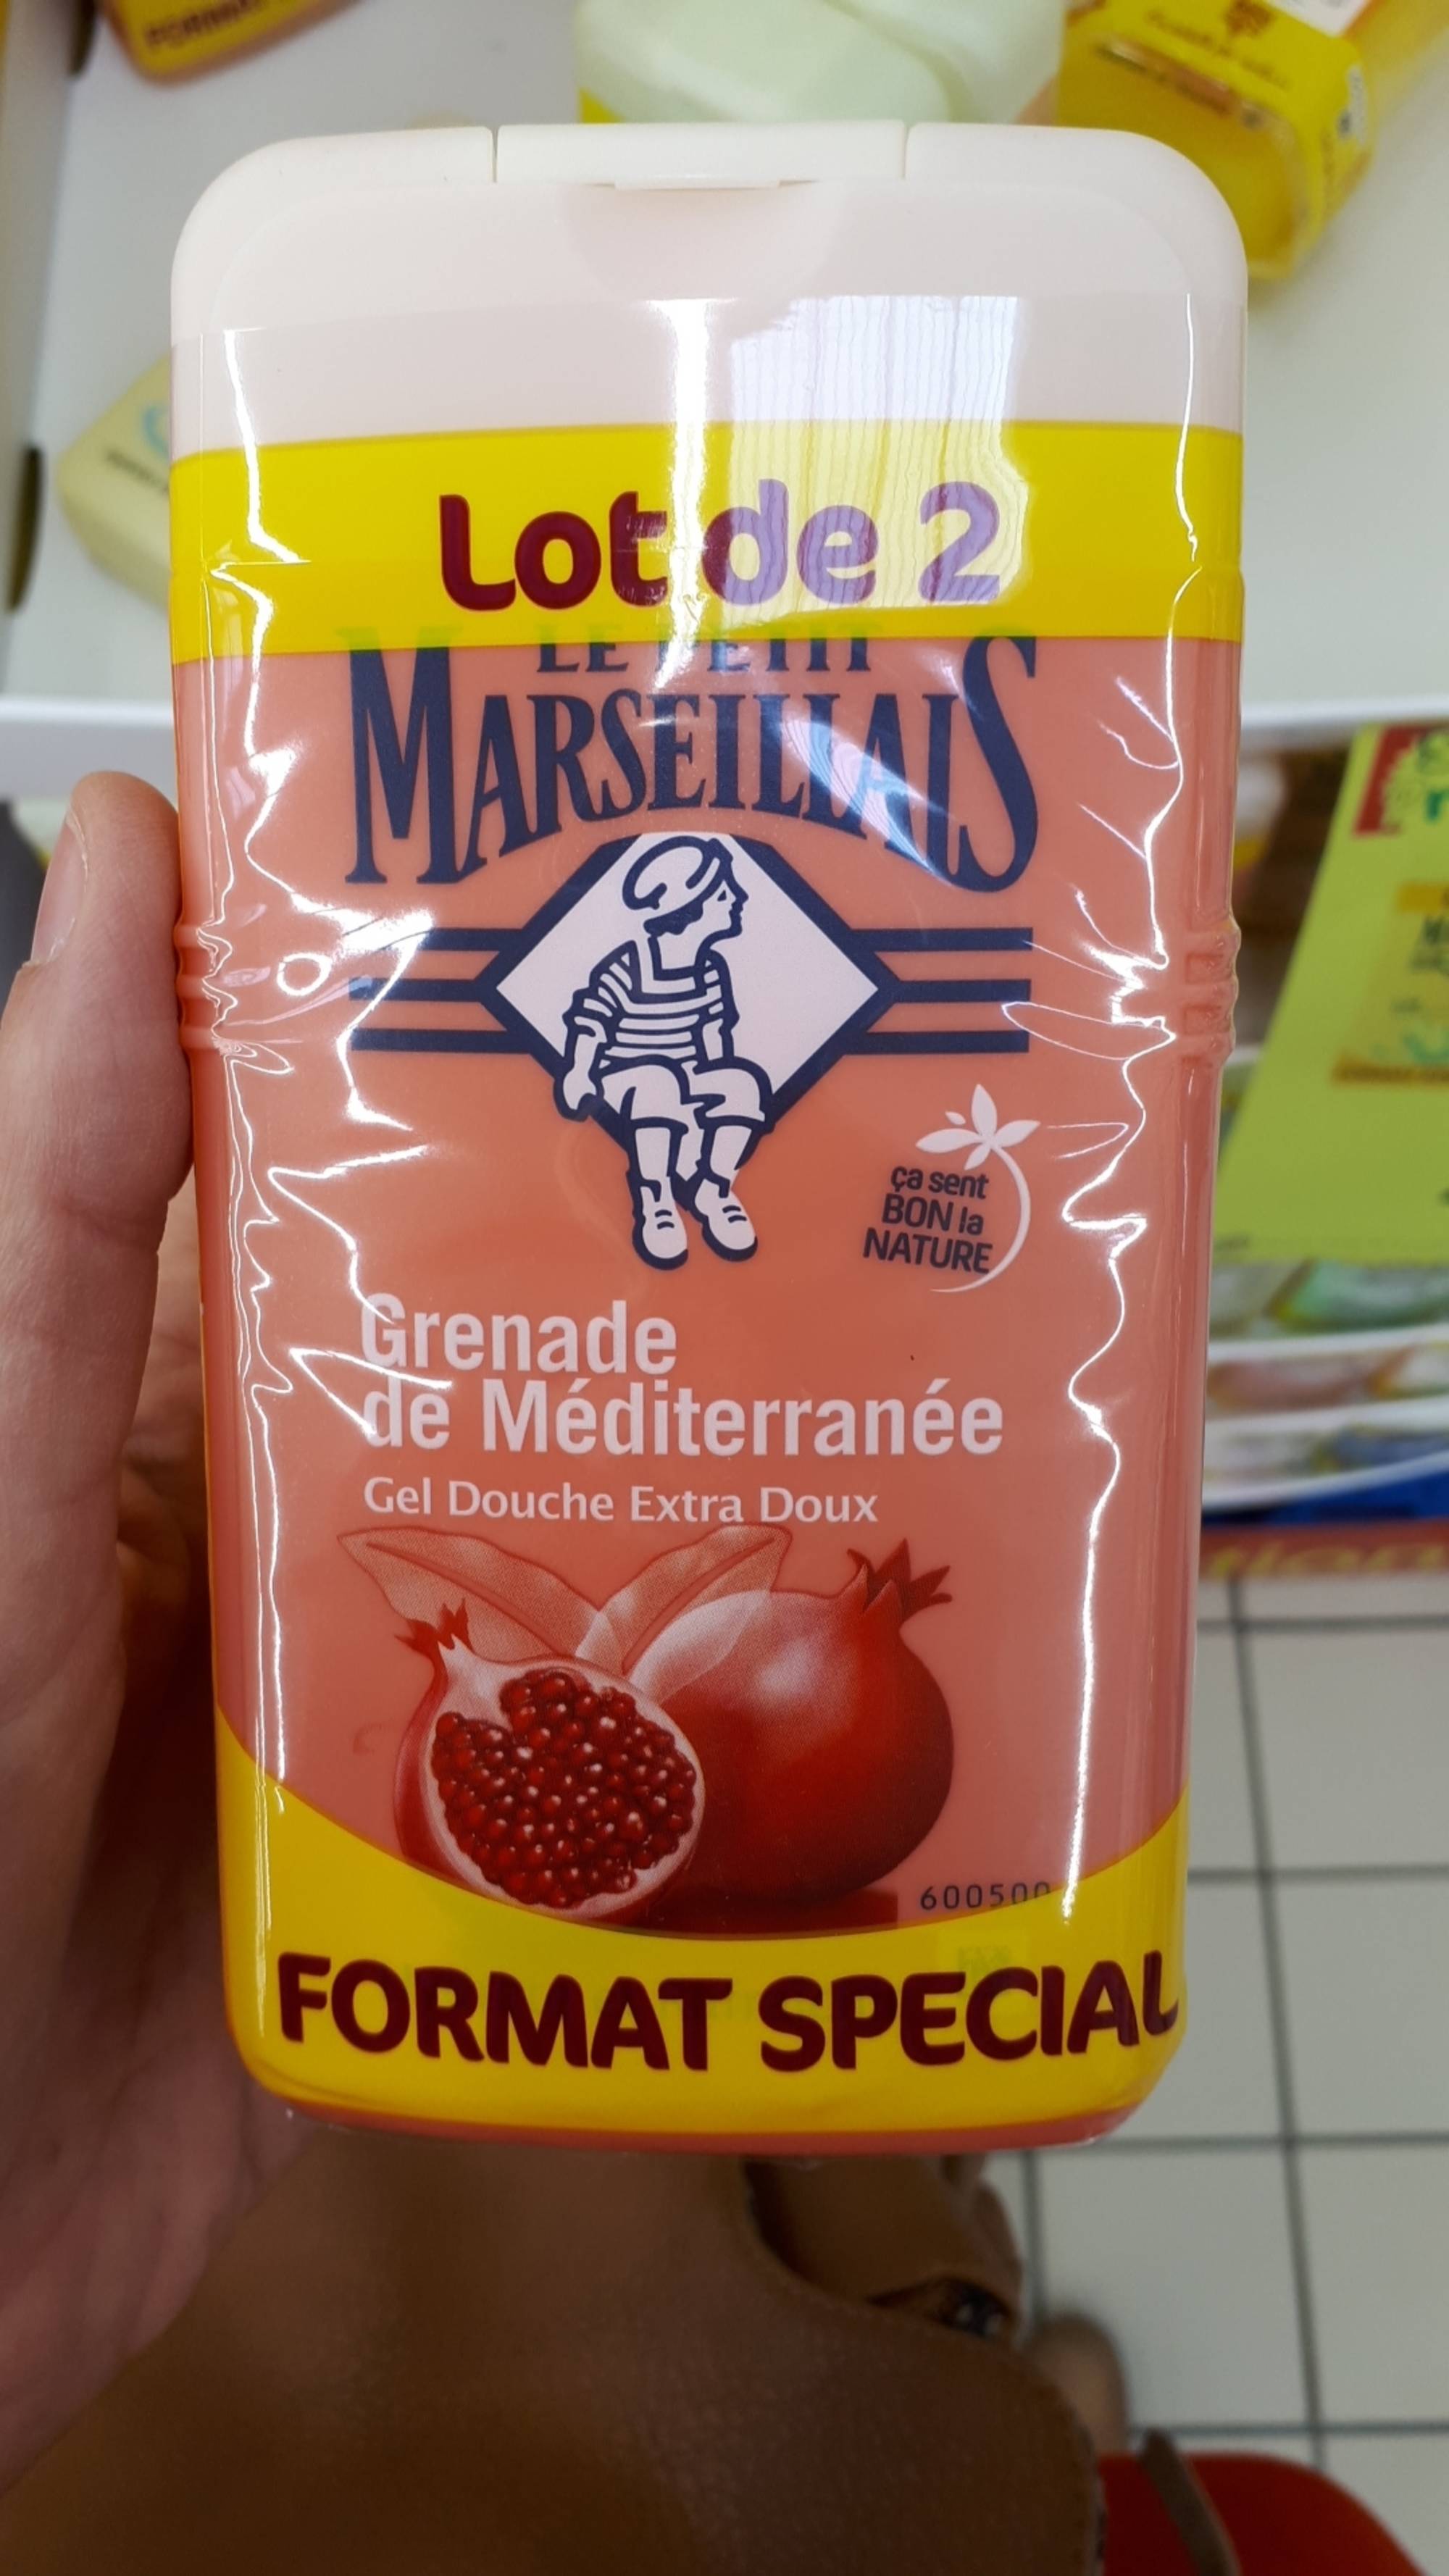 LE PETIT MARSEILLAIS - Grenade de méditerranée - Gel douche extra doux